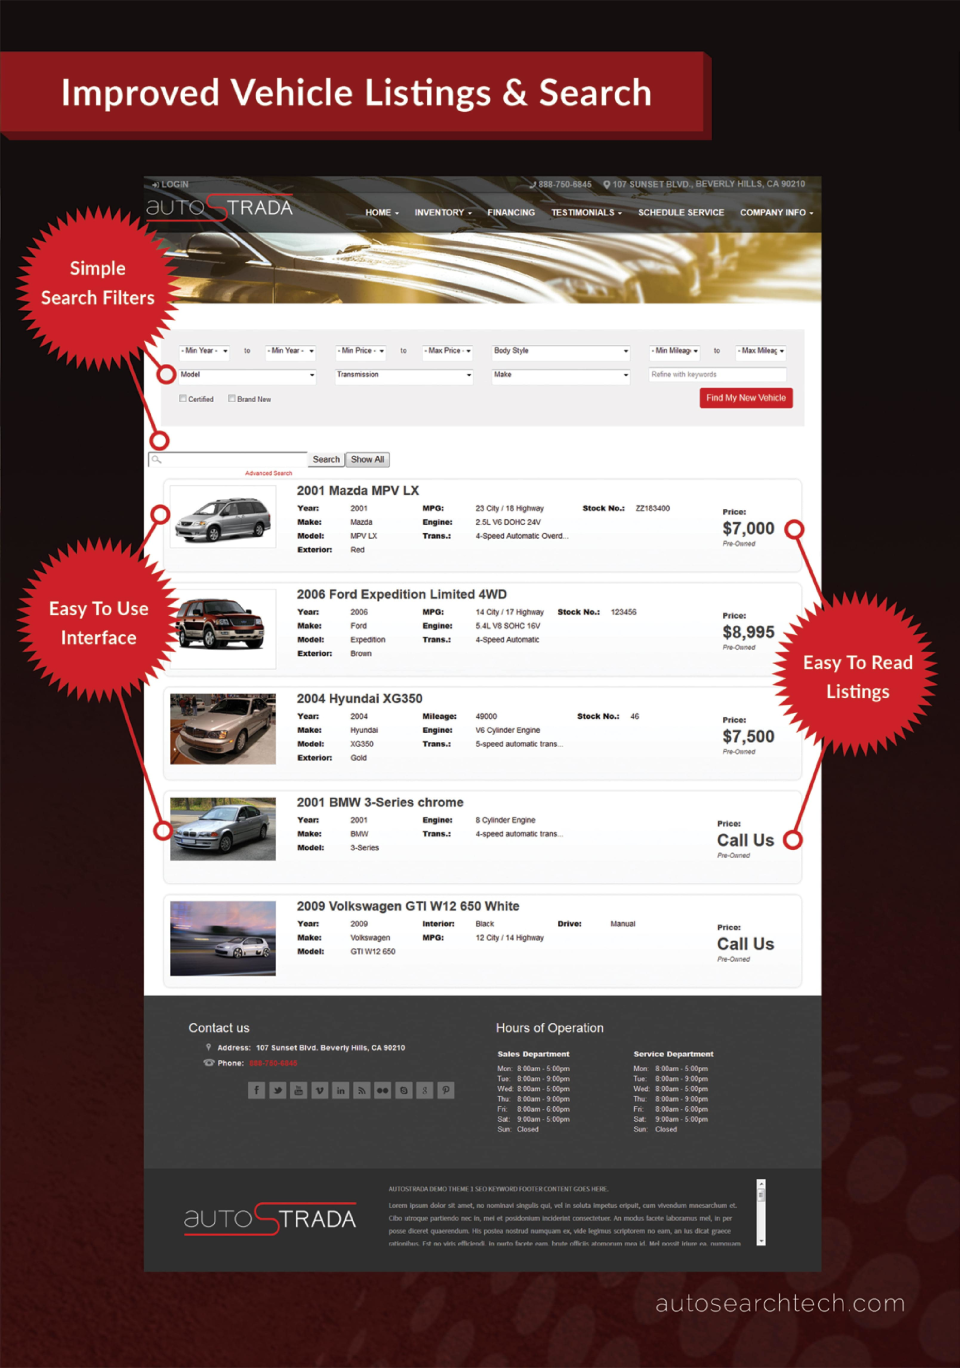 AutoSTRADA vehicle listing